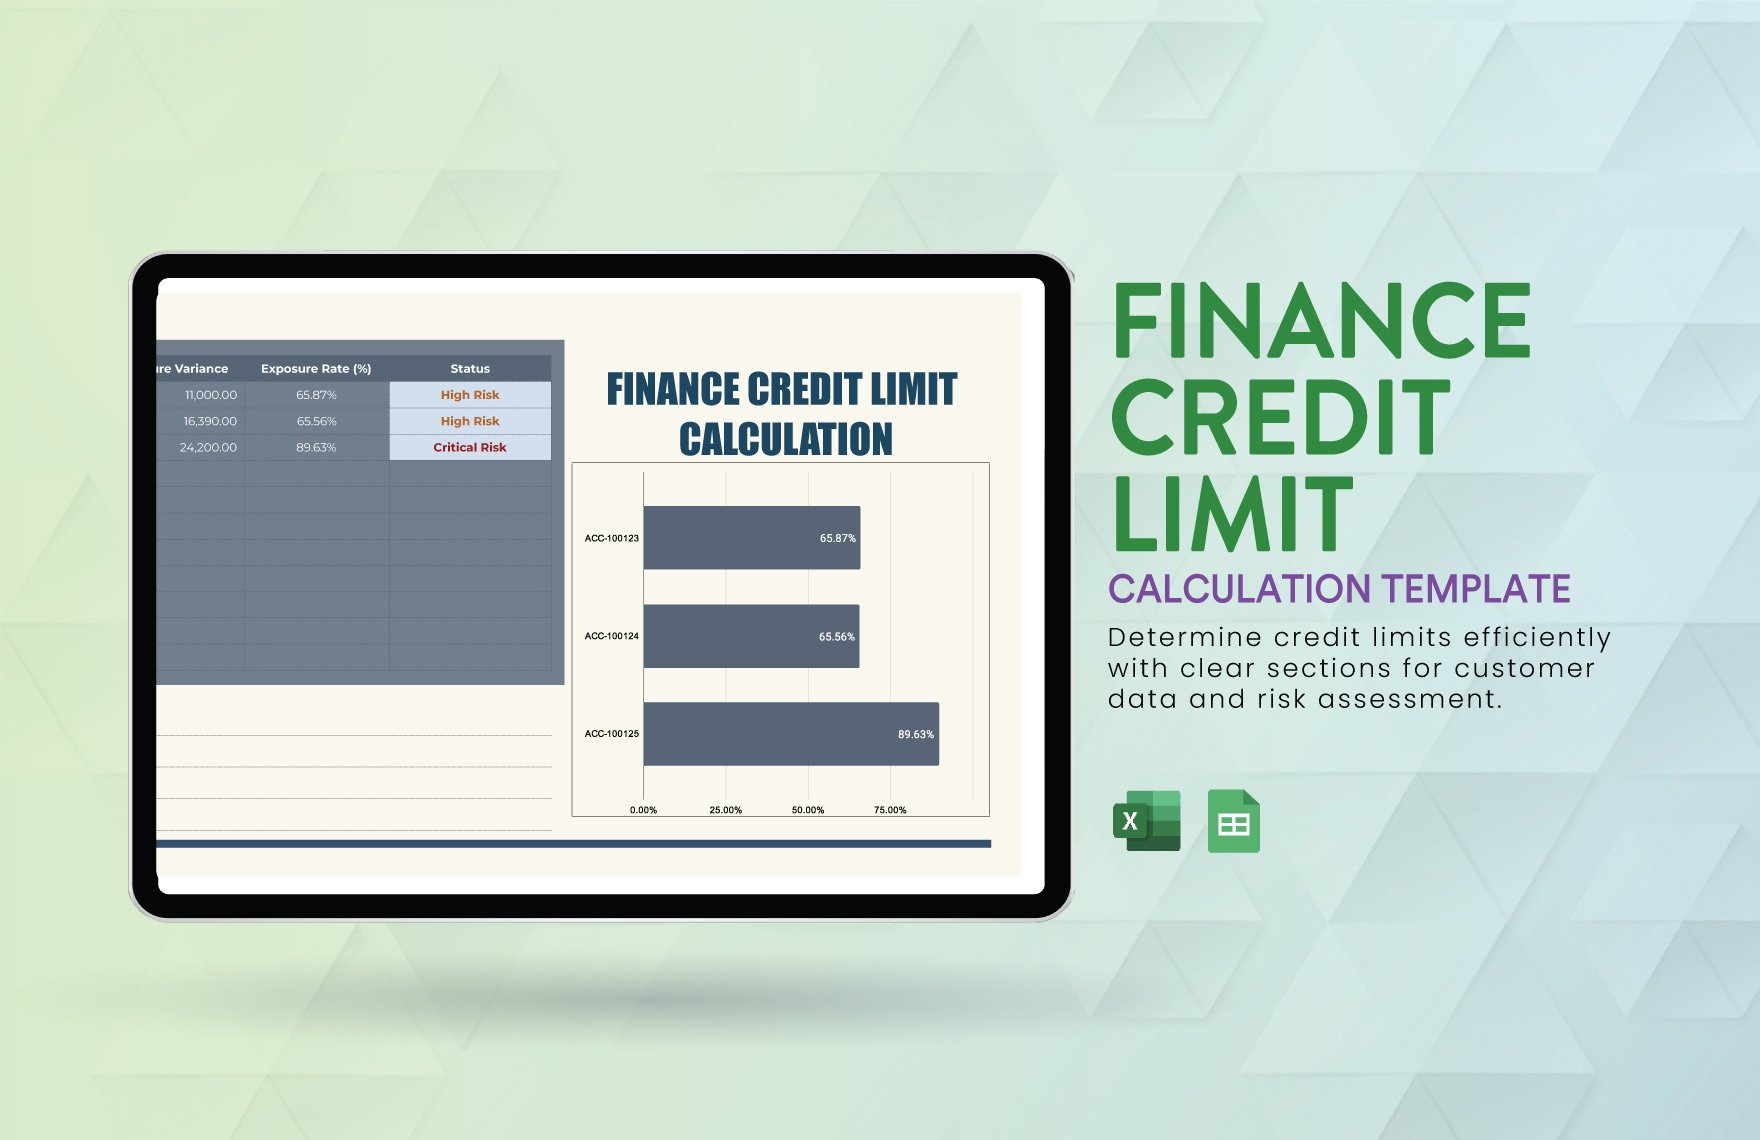 Finance Credit Limit Calculation Template